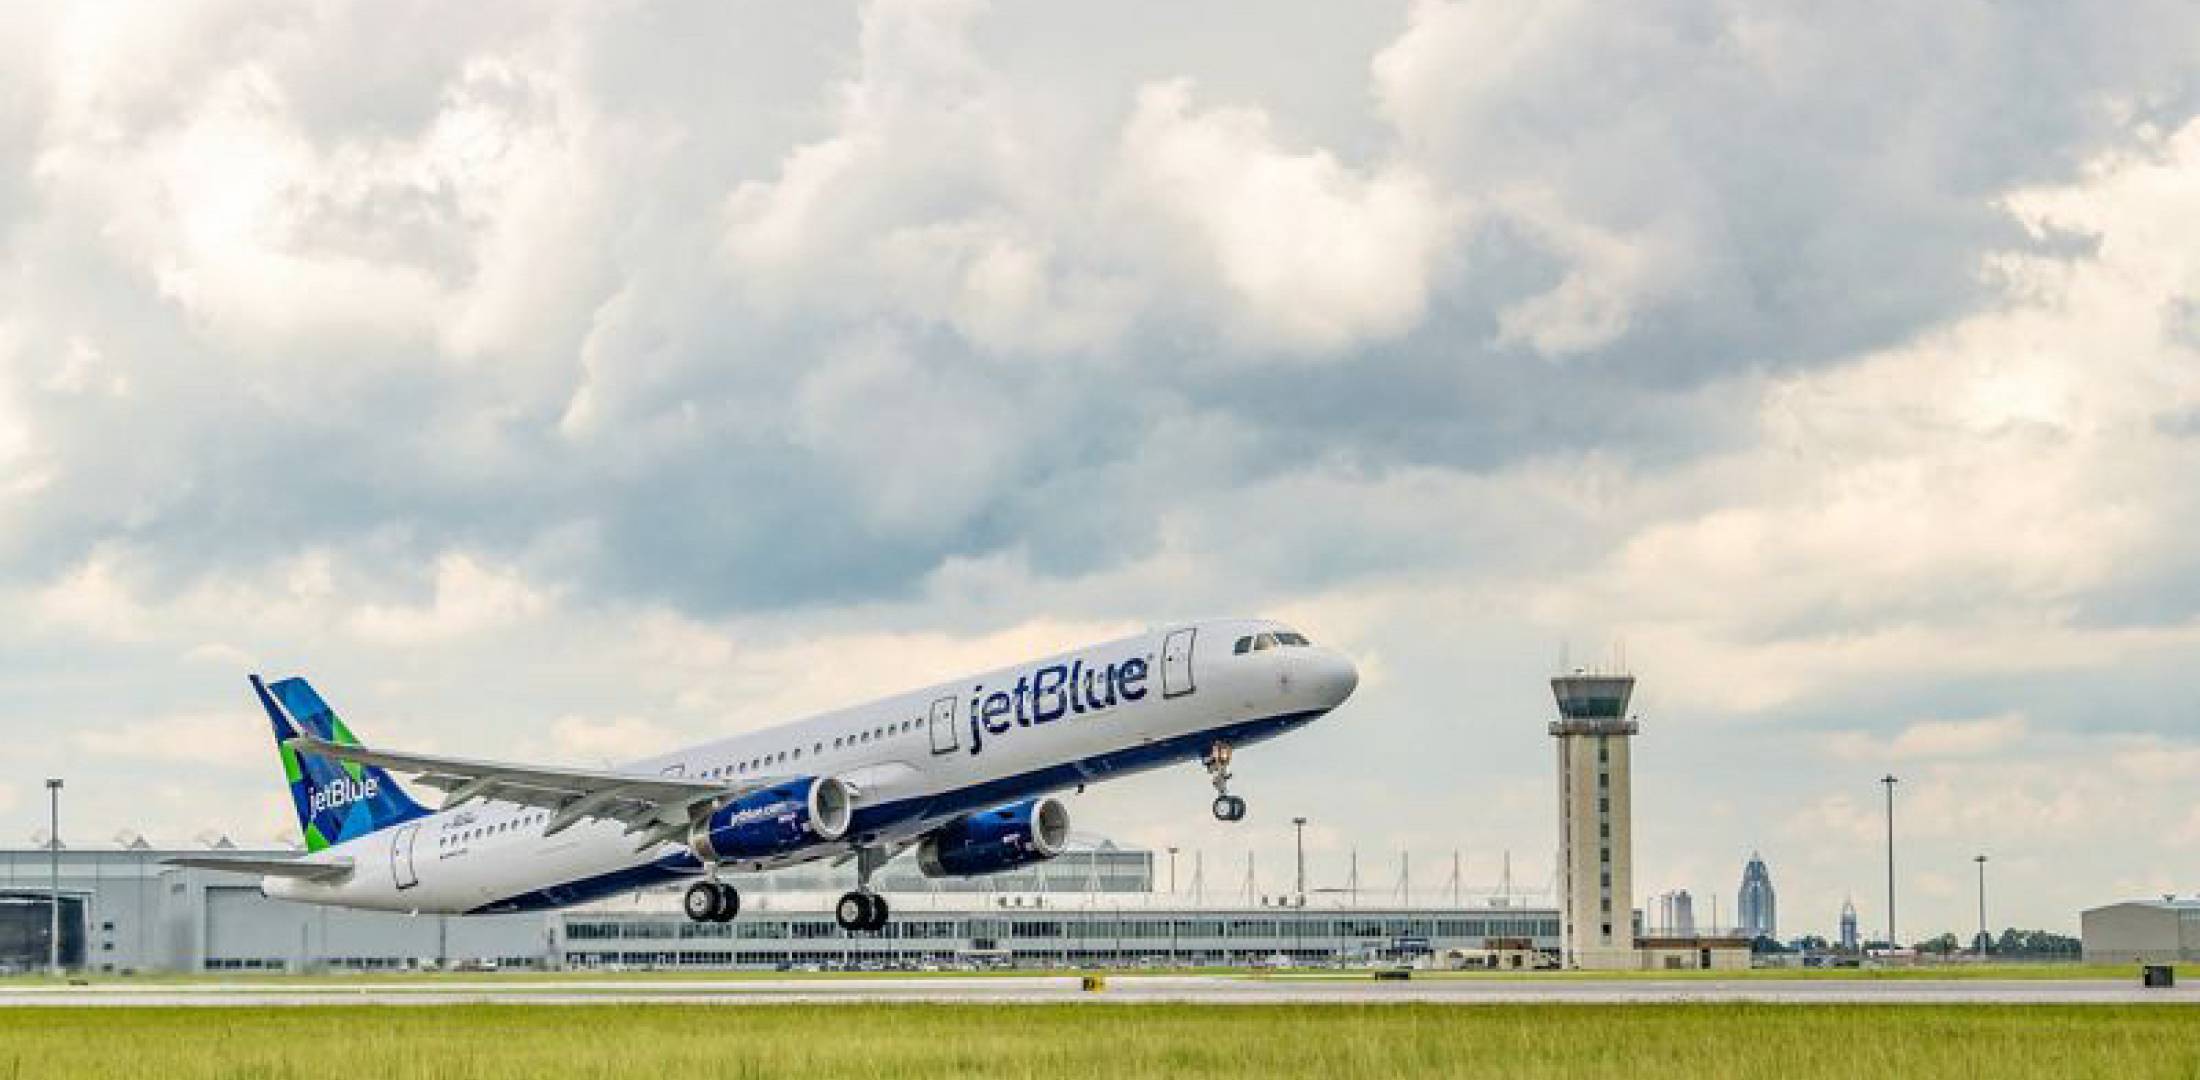 Photo: jetBlue Airbus A321neo; credit: Airbus